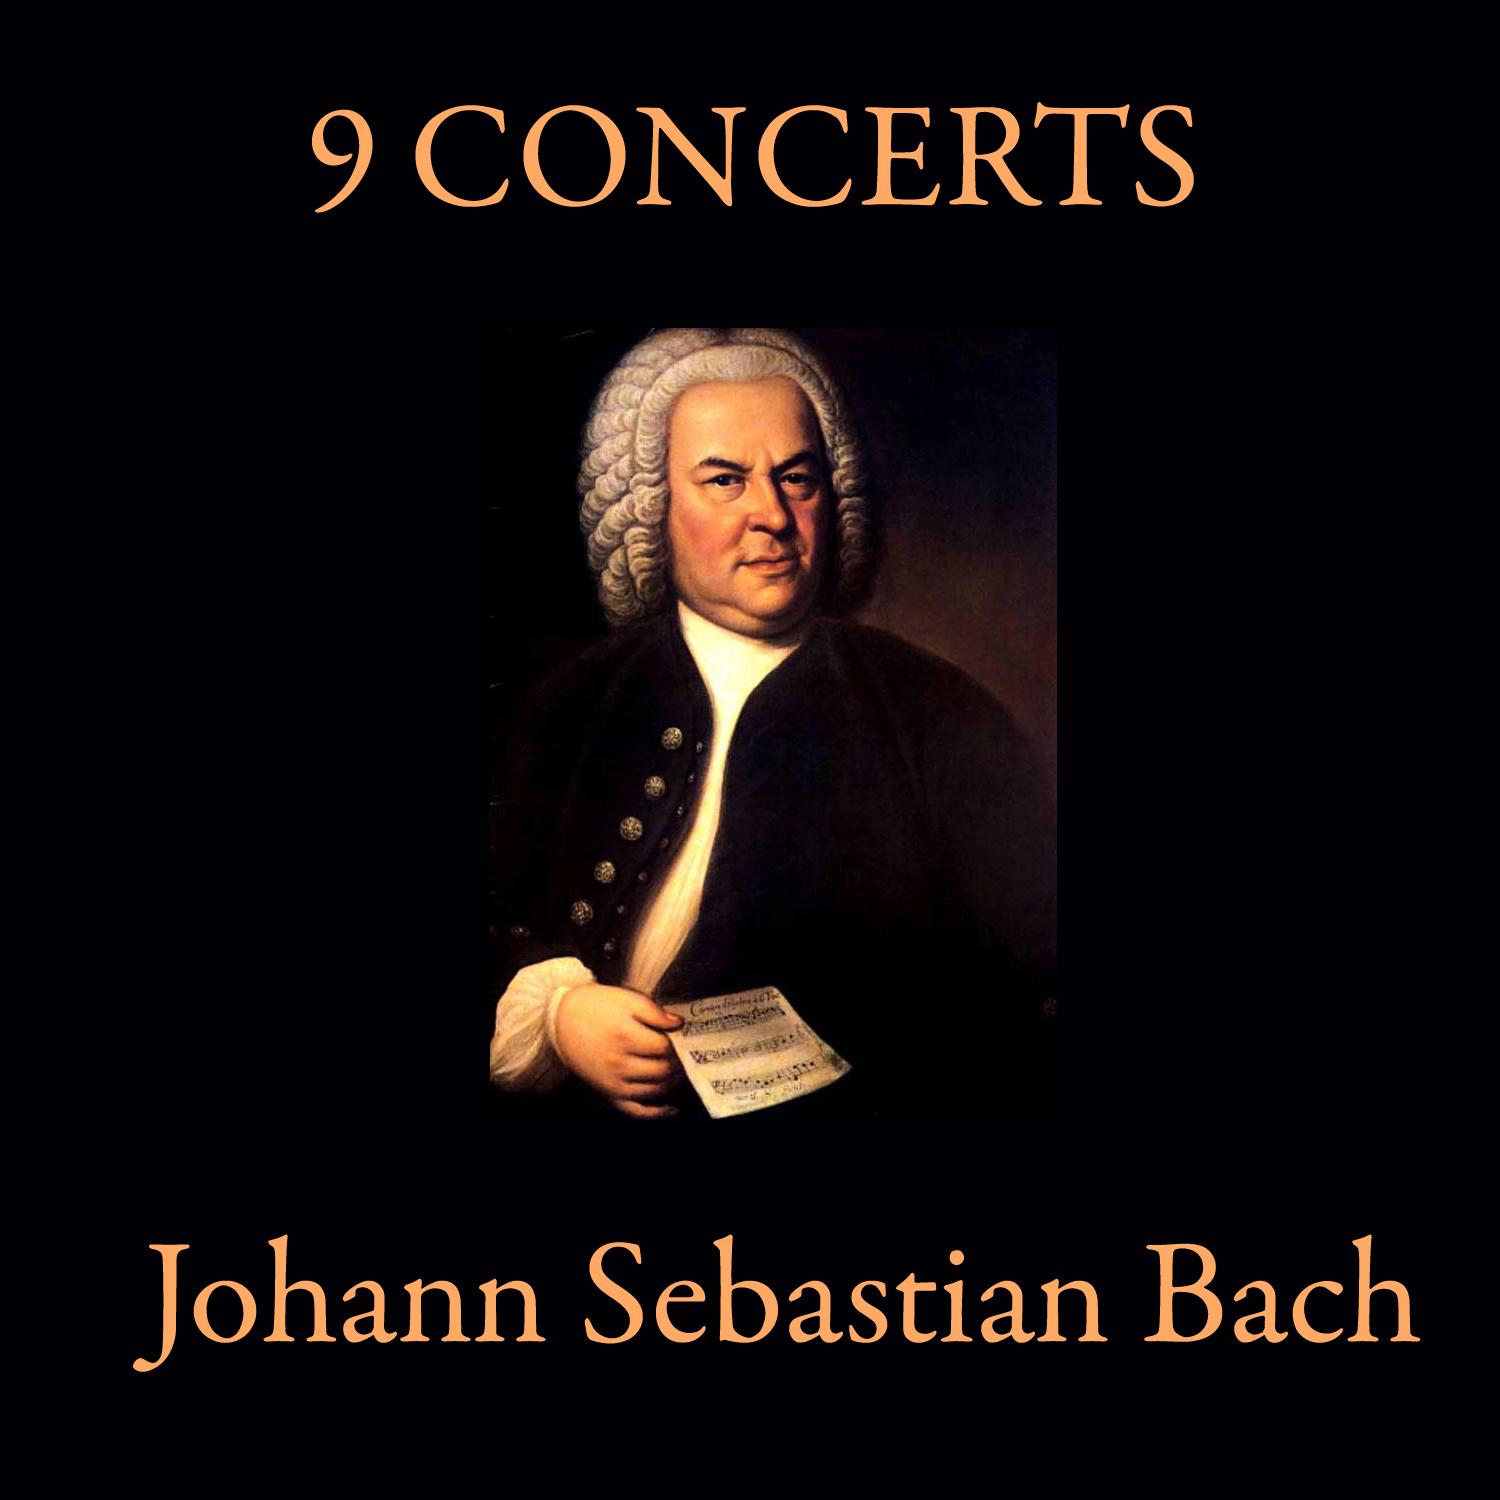 Concerto for violin strings and basso continuo in A minor (BWV 1041) Allegro Assai